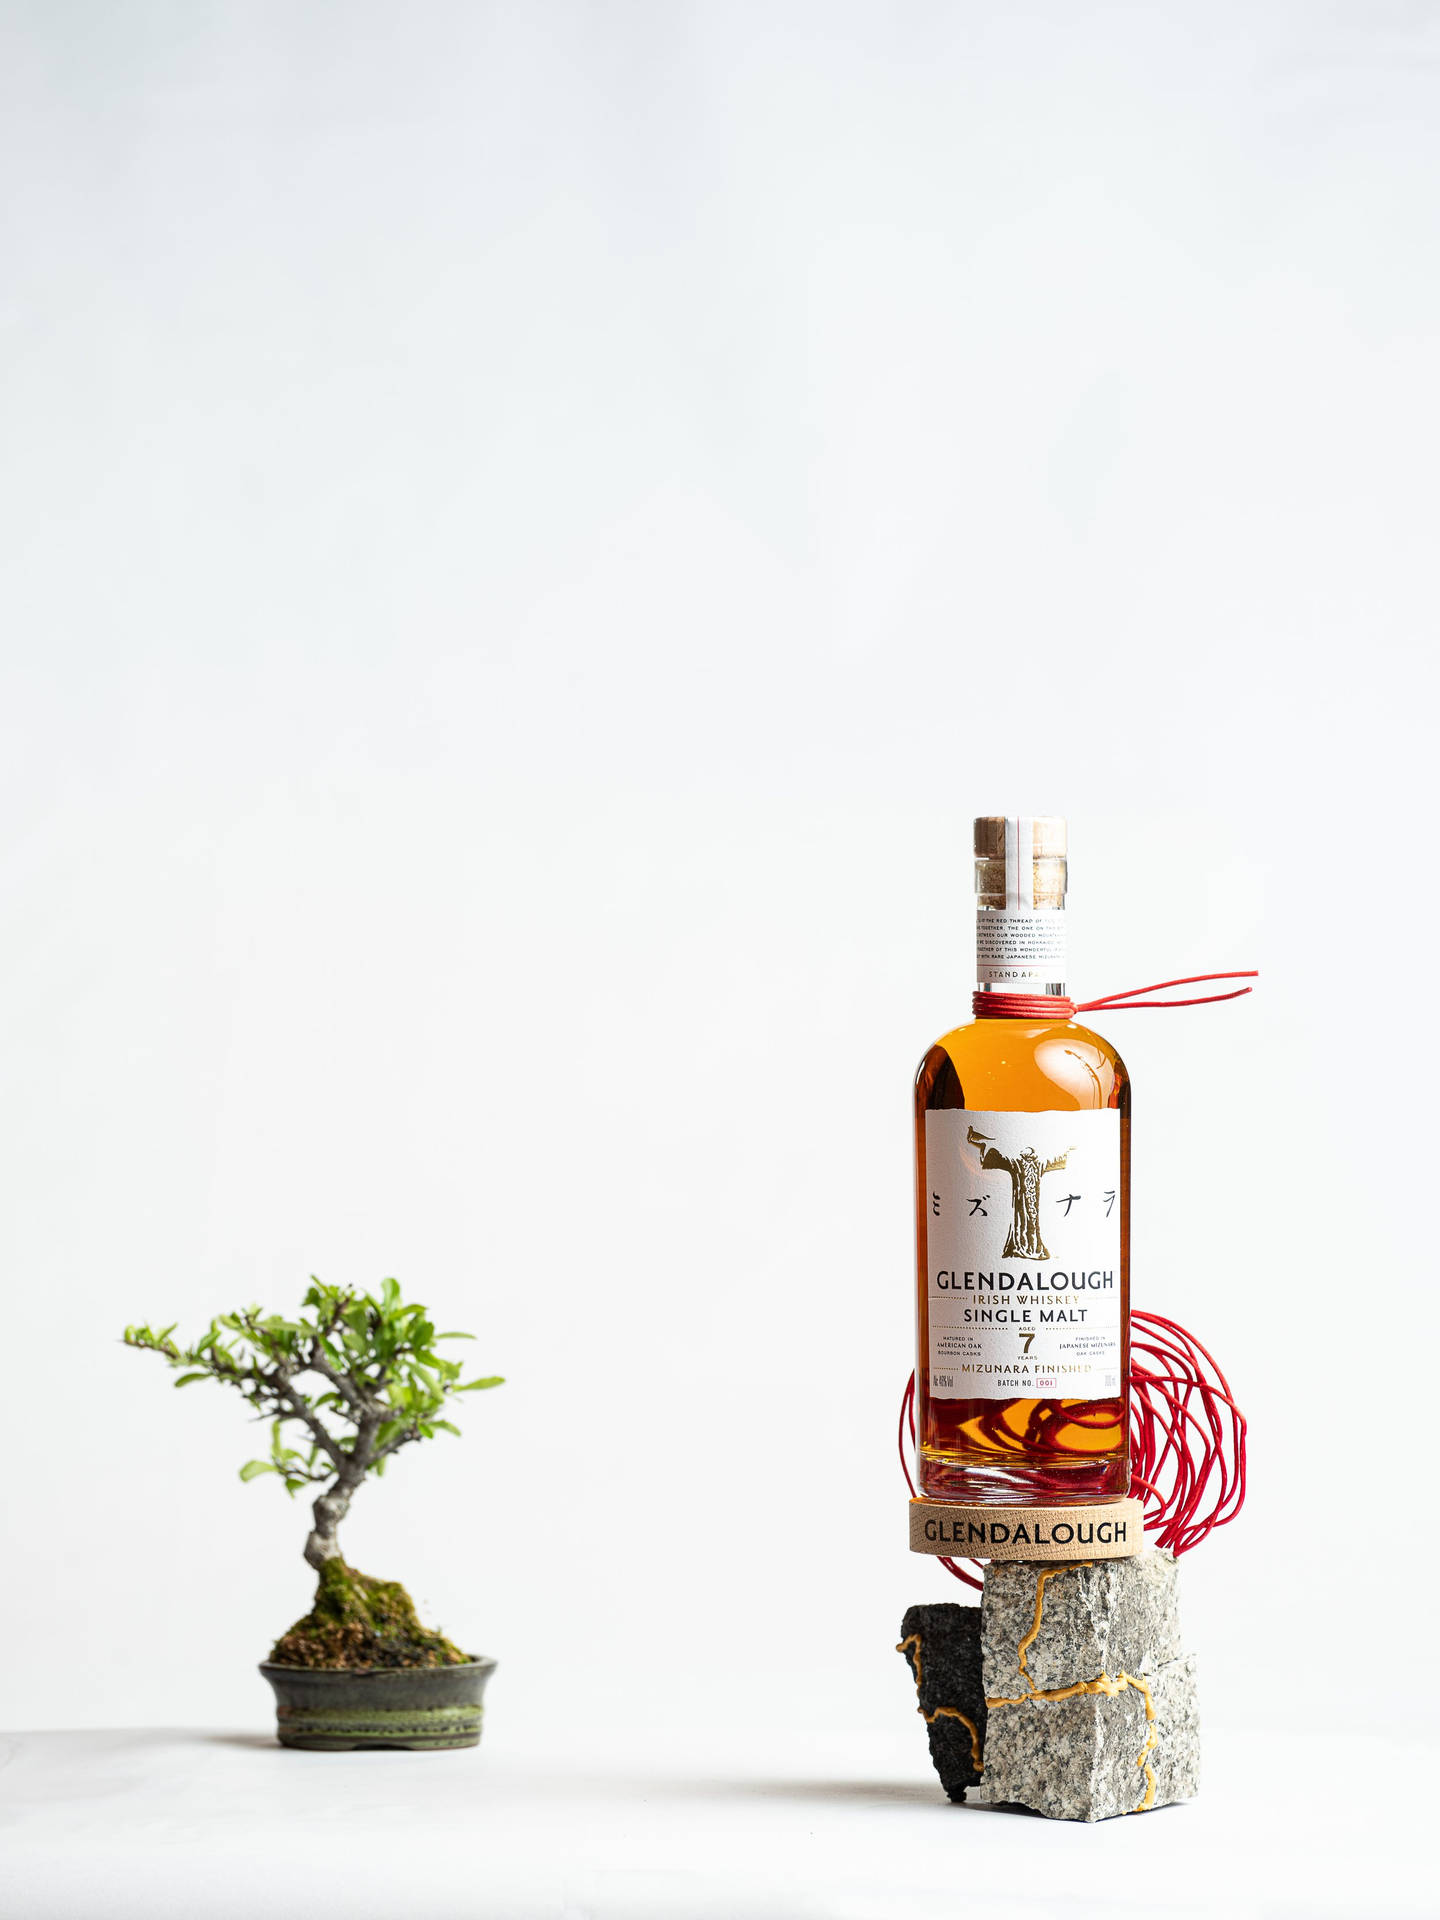 Glendaloughwhiskey Dritter Verstand Gestaltung Minimalistisch Wallpaper